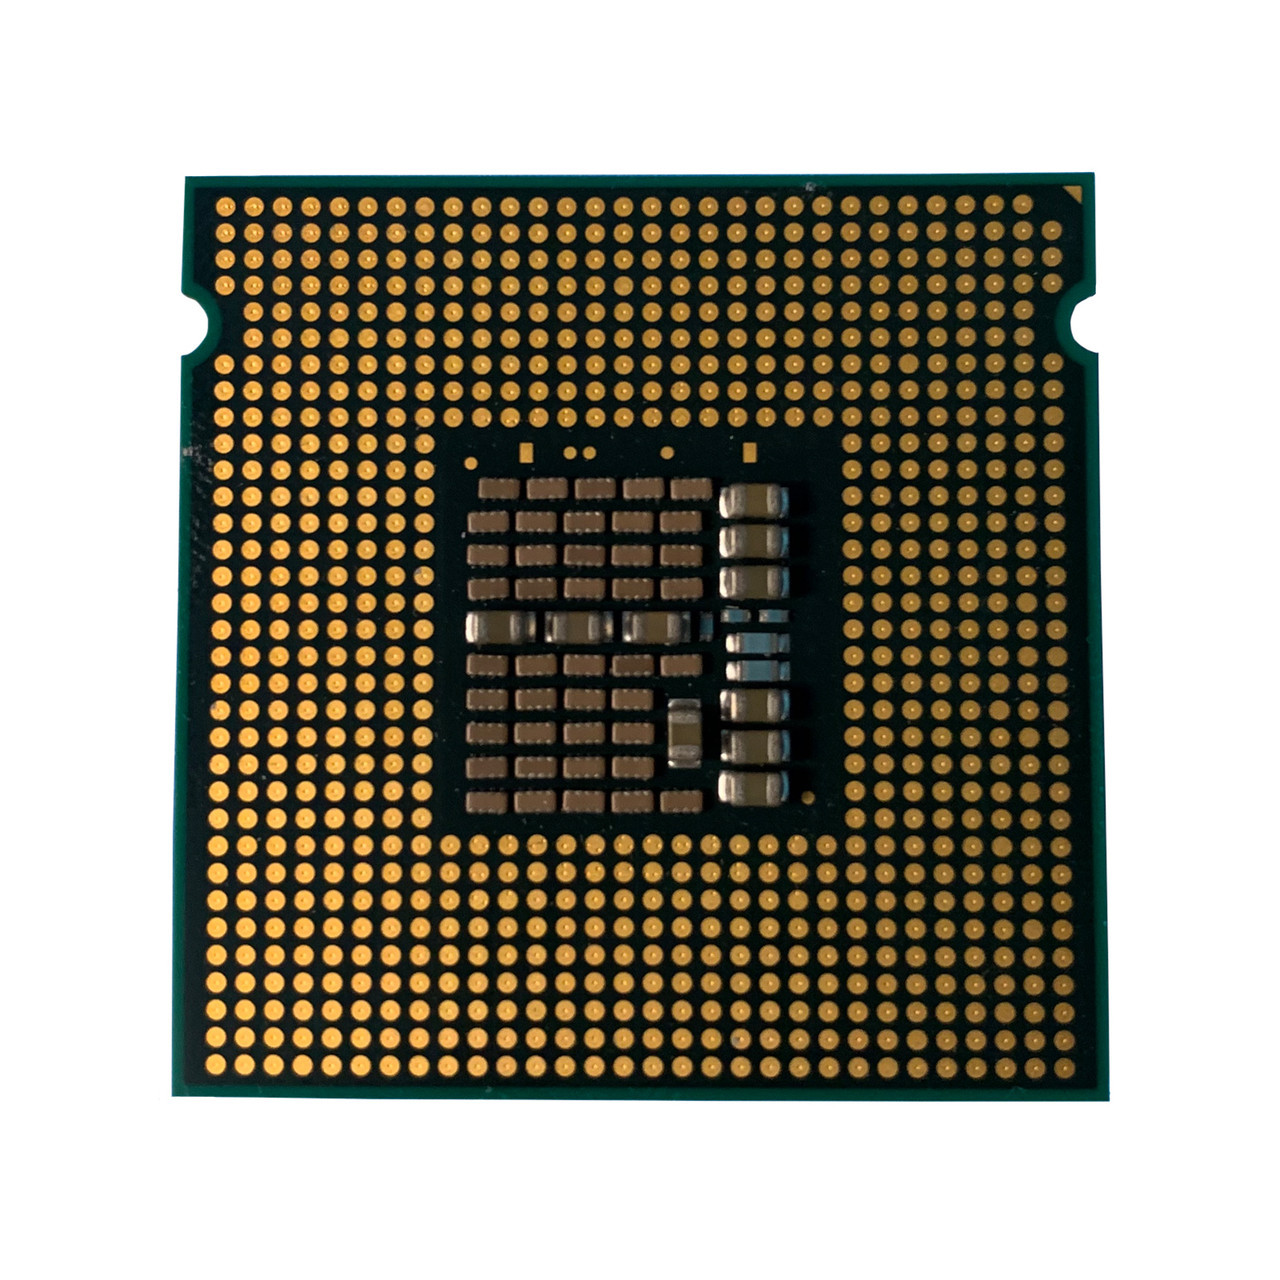 Intel SLACD Xeon 3060 DC 2.40Ghz 4MB 1066FSB Processor